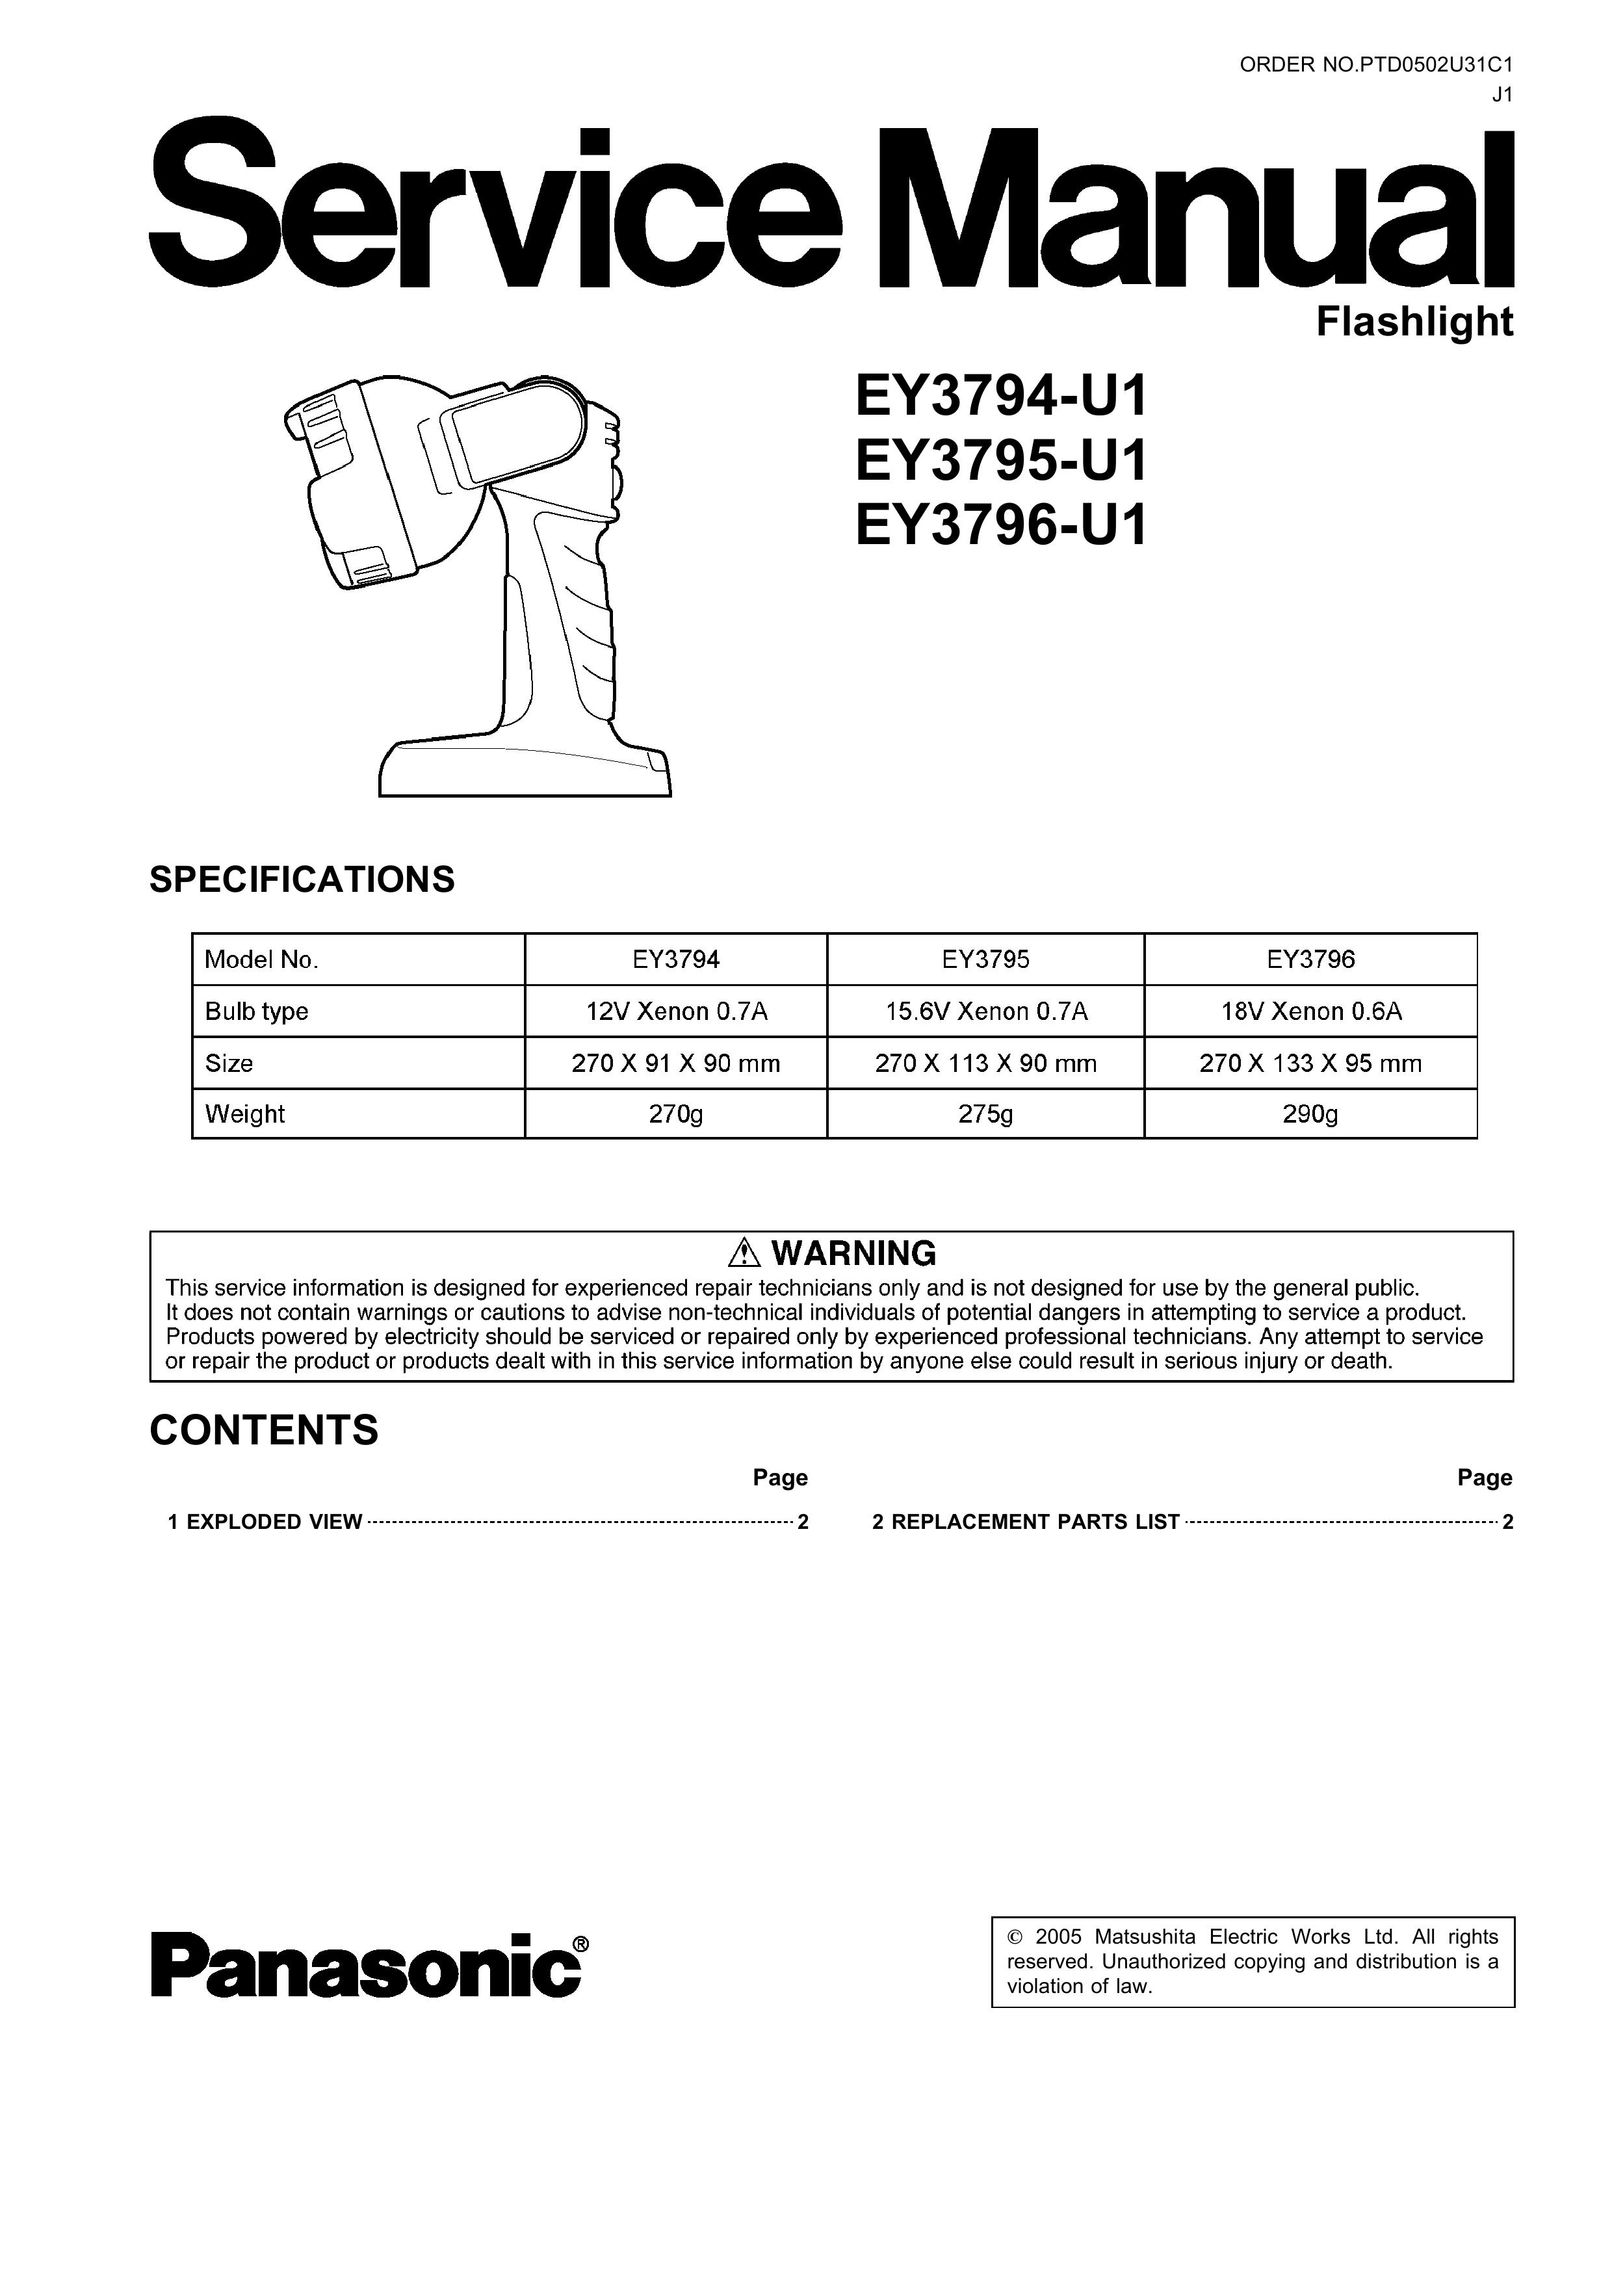 Panasonic EY3794-U1 Home Safety Product User Manual